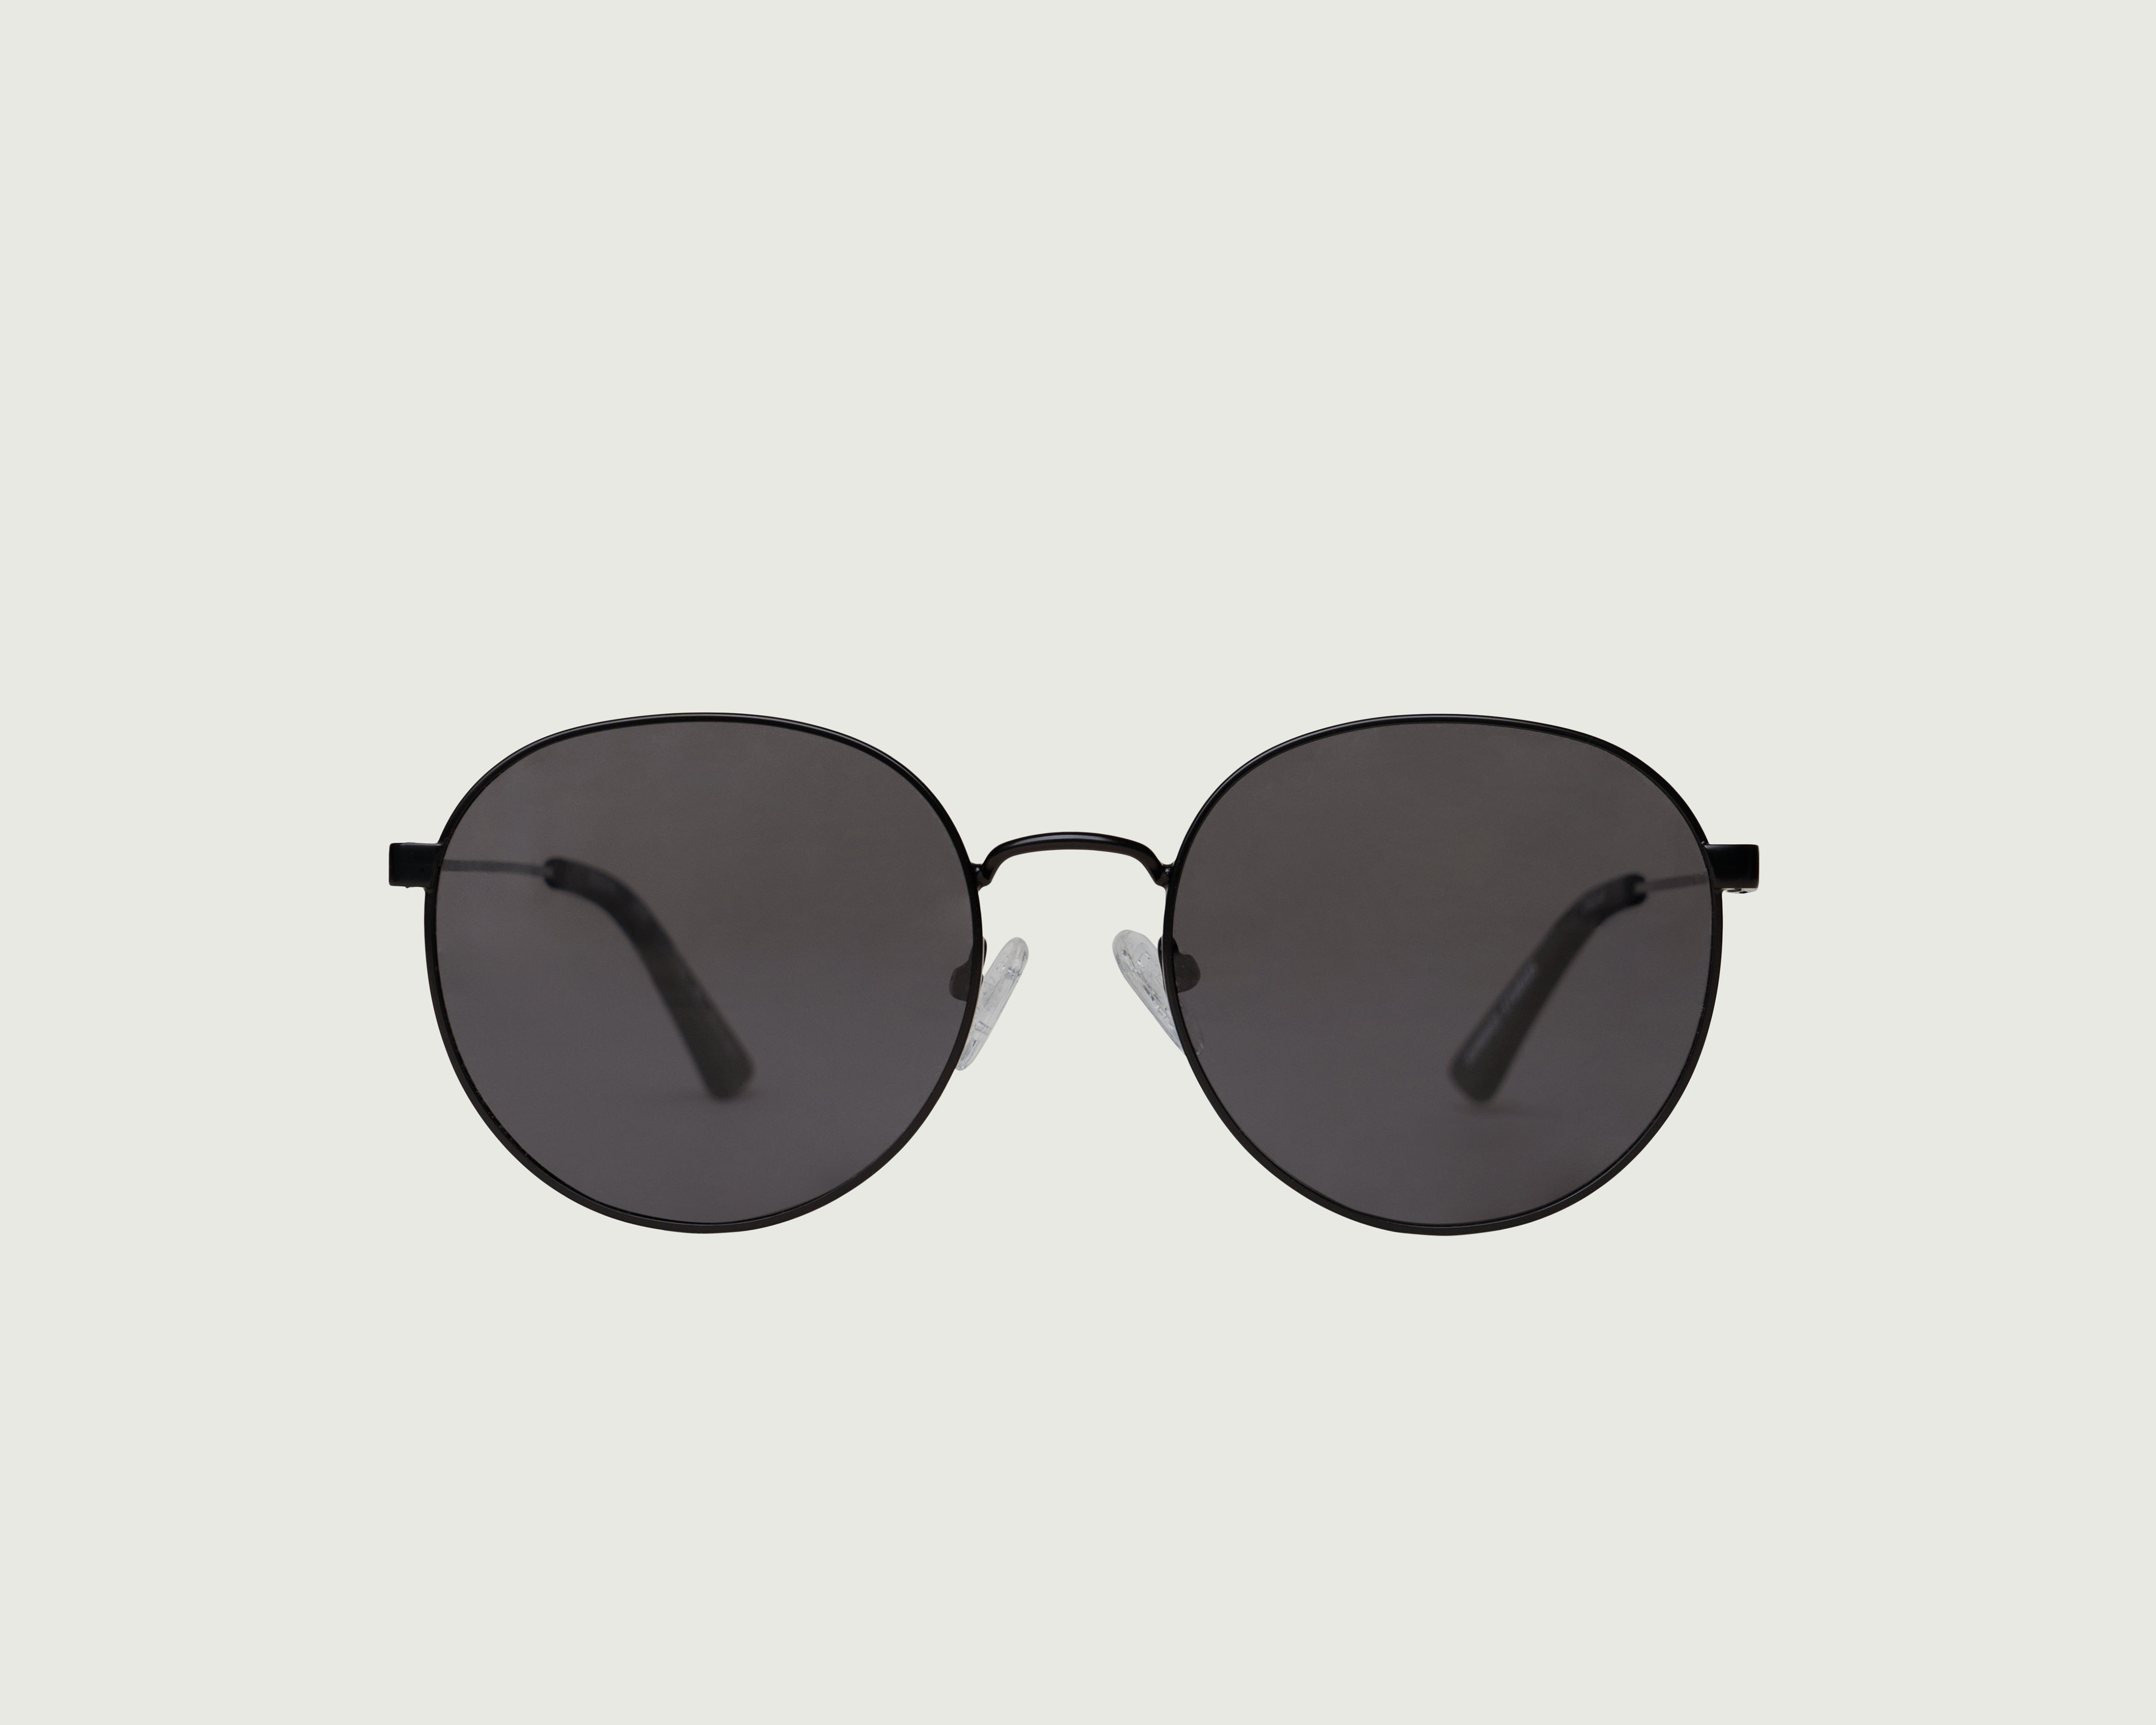 Charcoal Polarized::Leon Sunglasses round black metal front